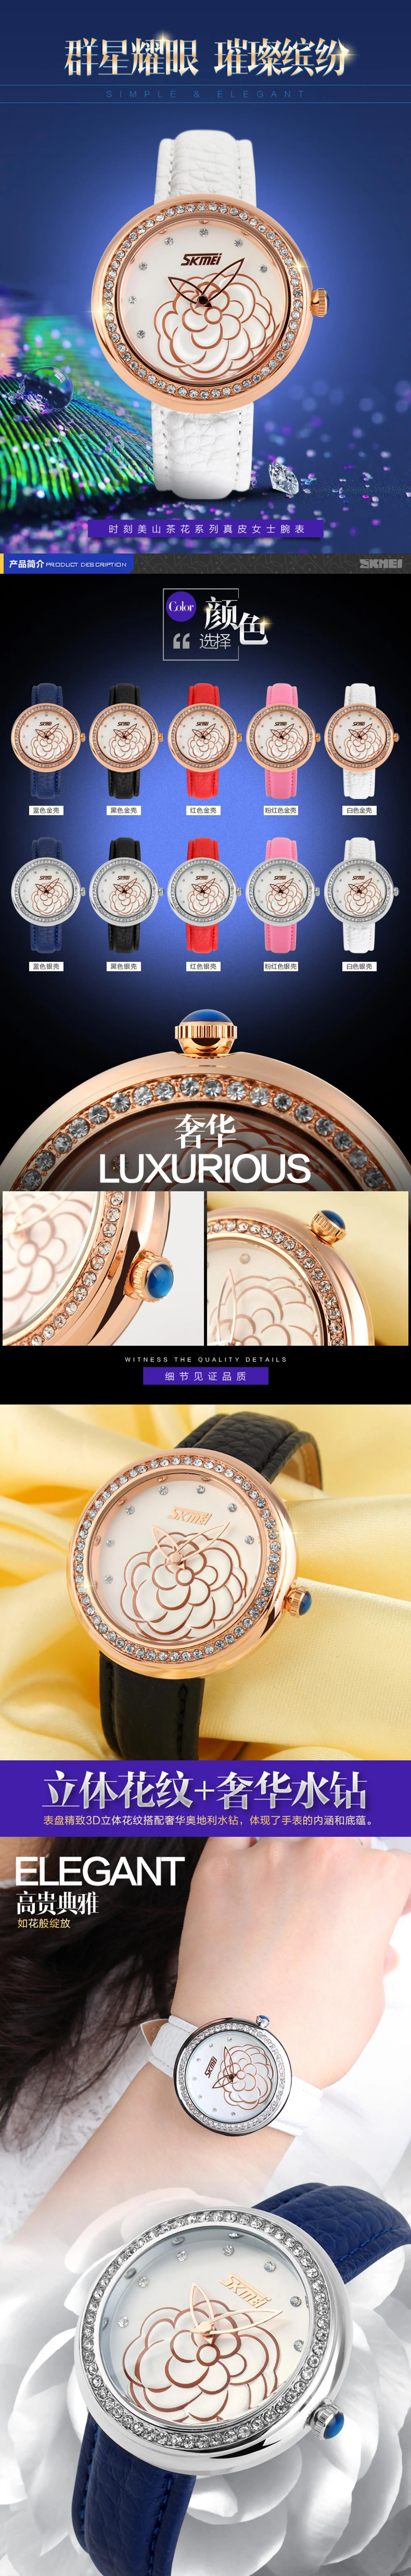 TIMESQUARTZ Wrist Watch A-261 for Women : Amazon.in: Fashion